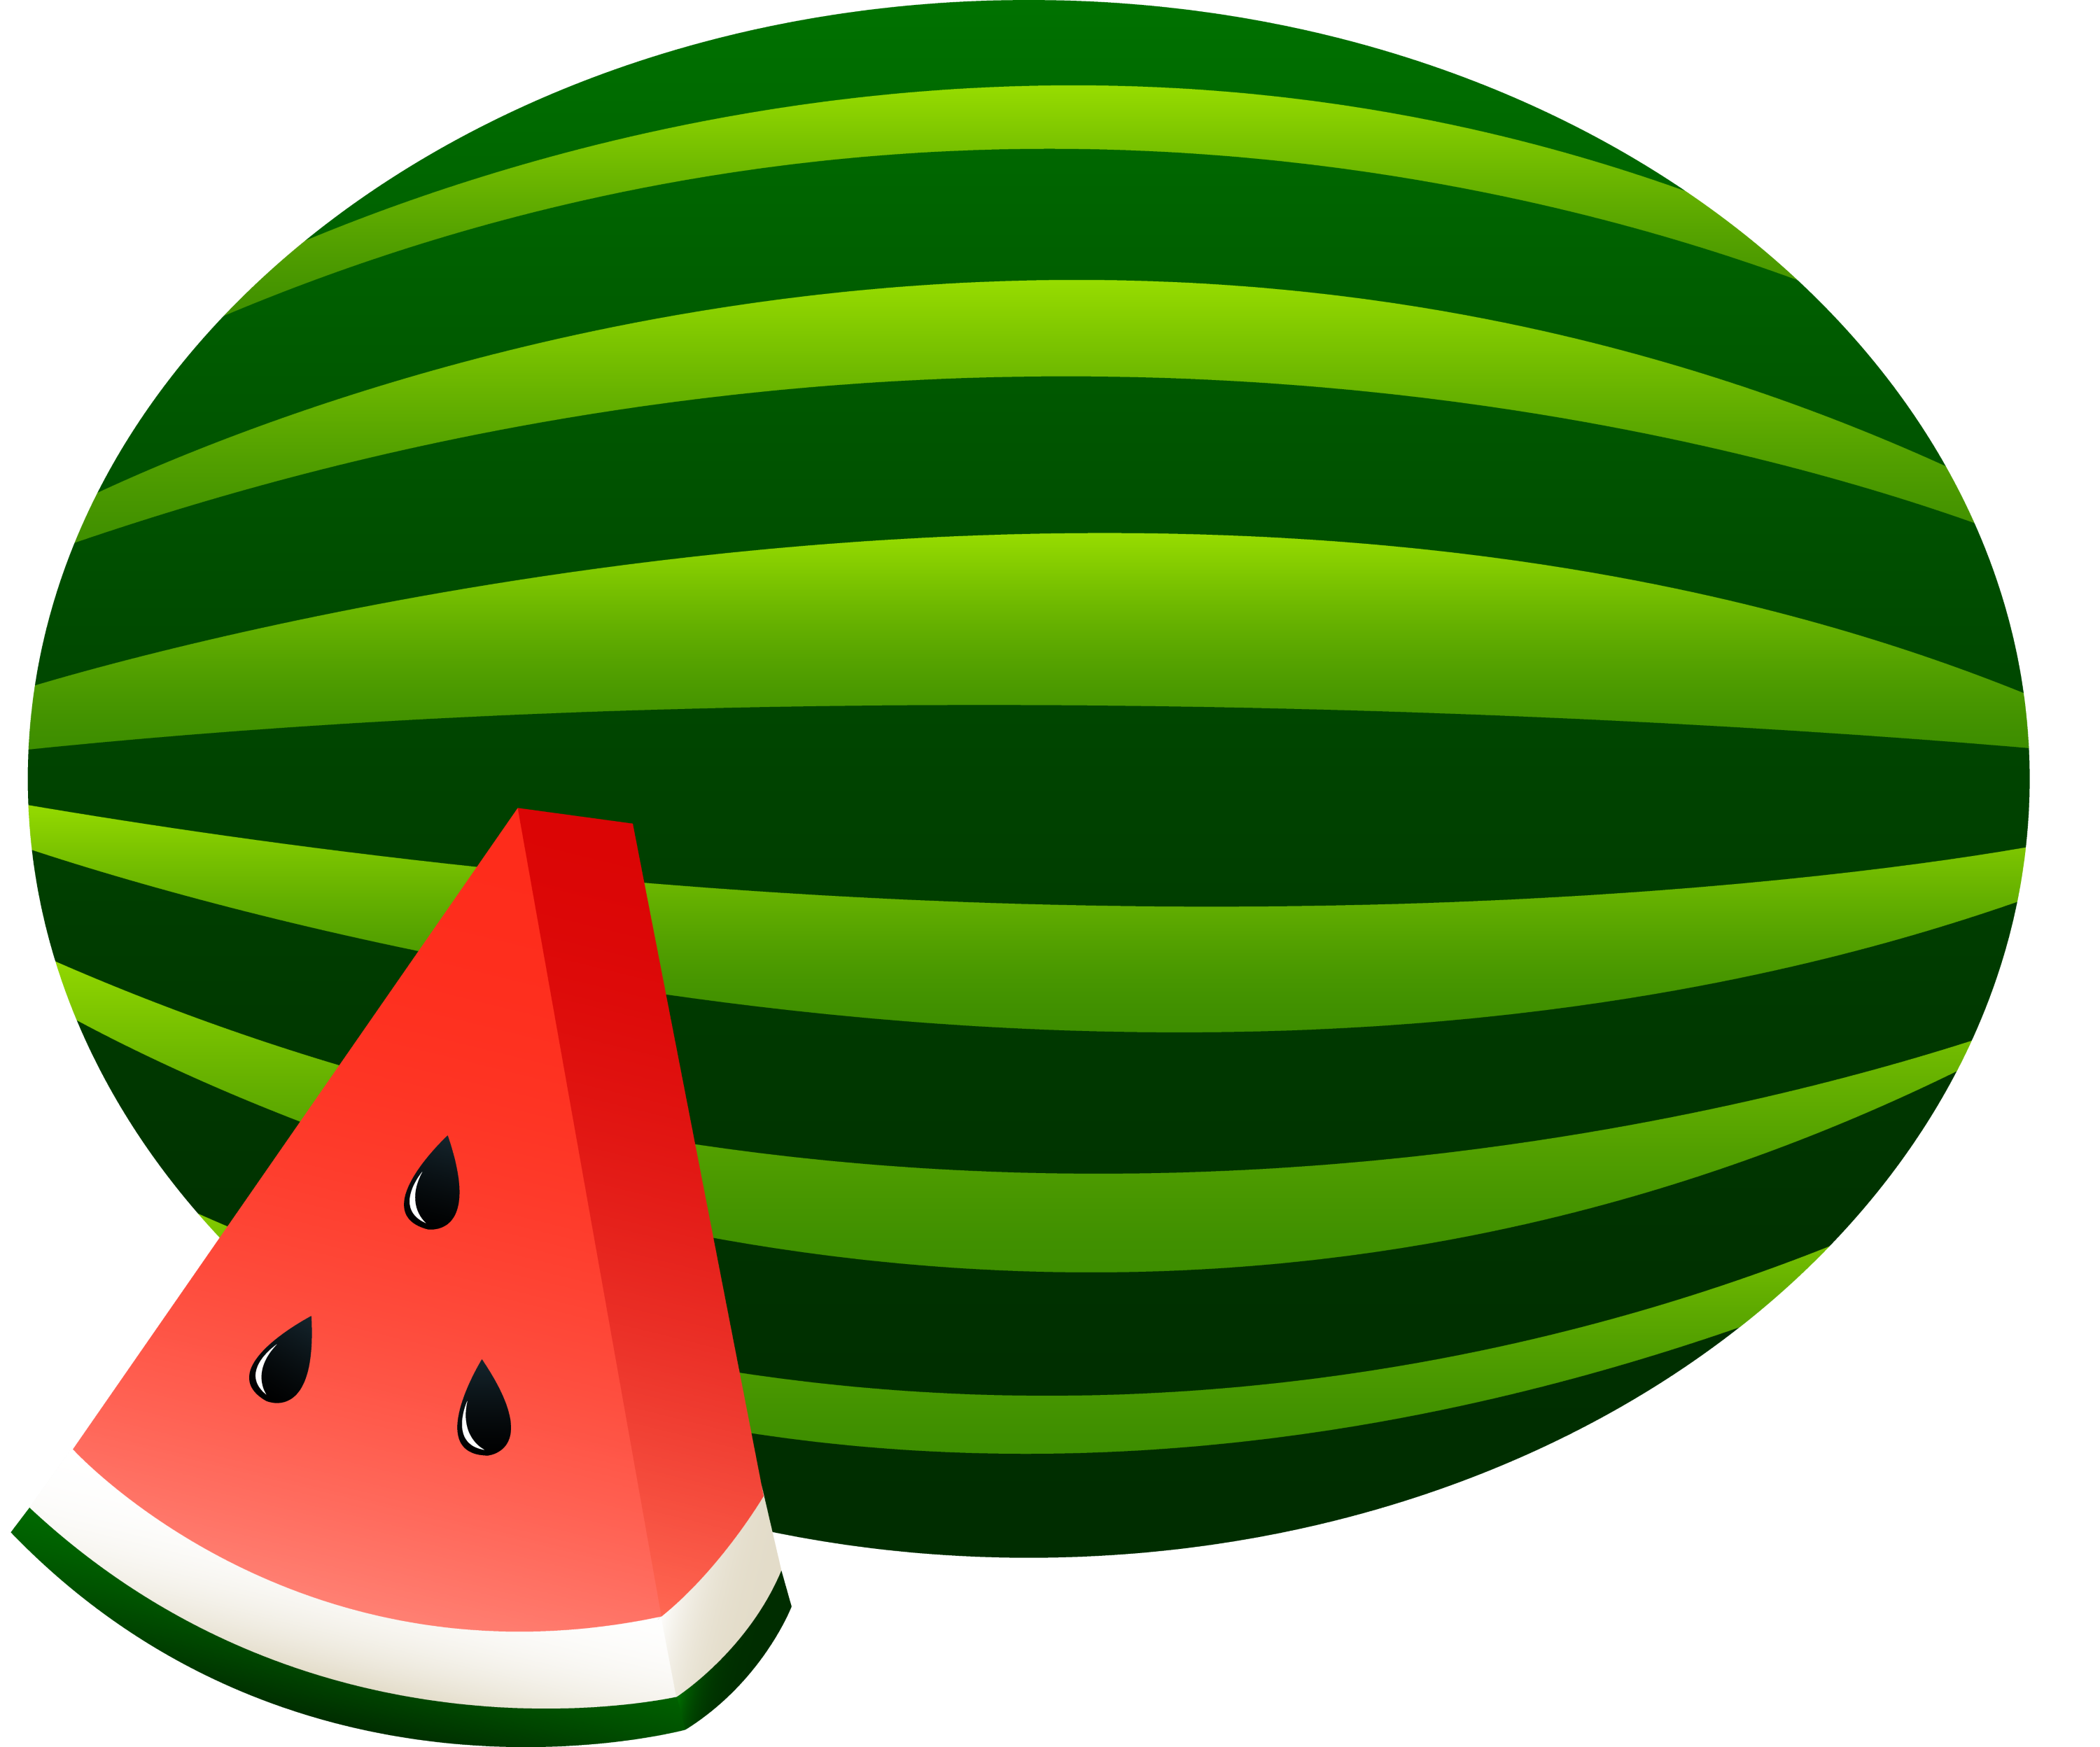 Watermelon Whole and Slice - Free Clip Art